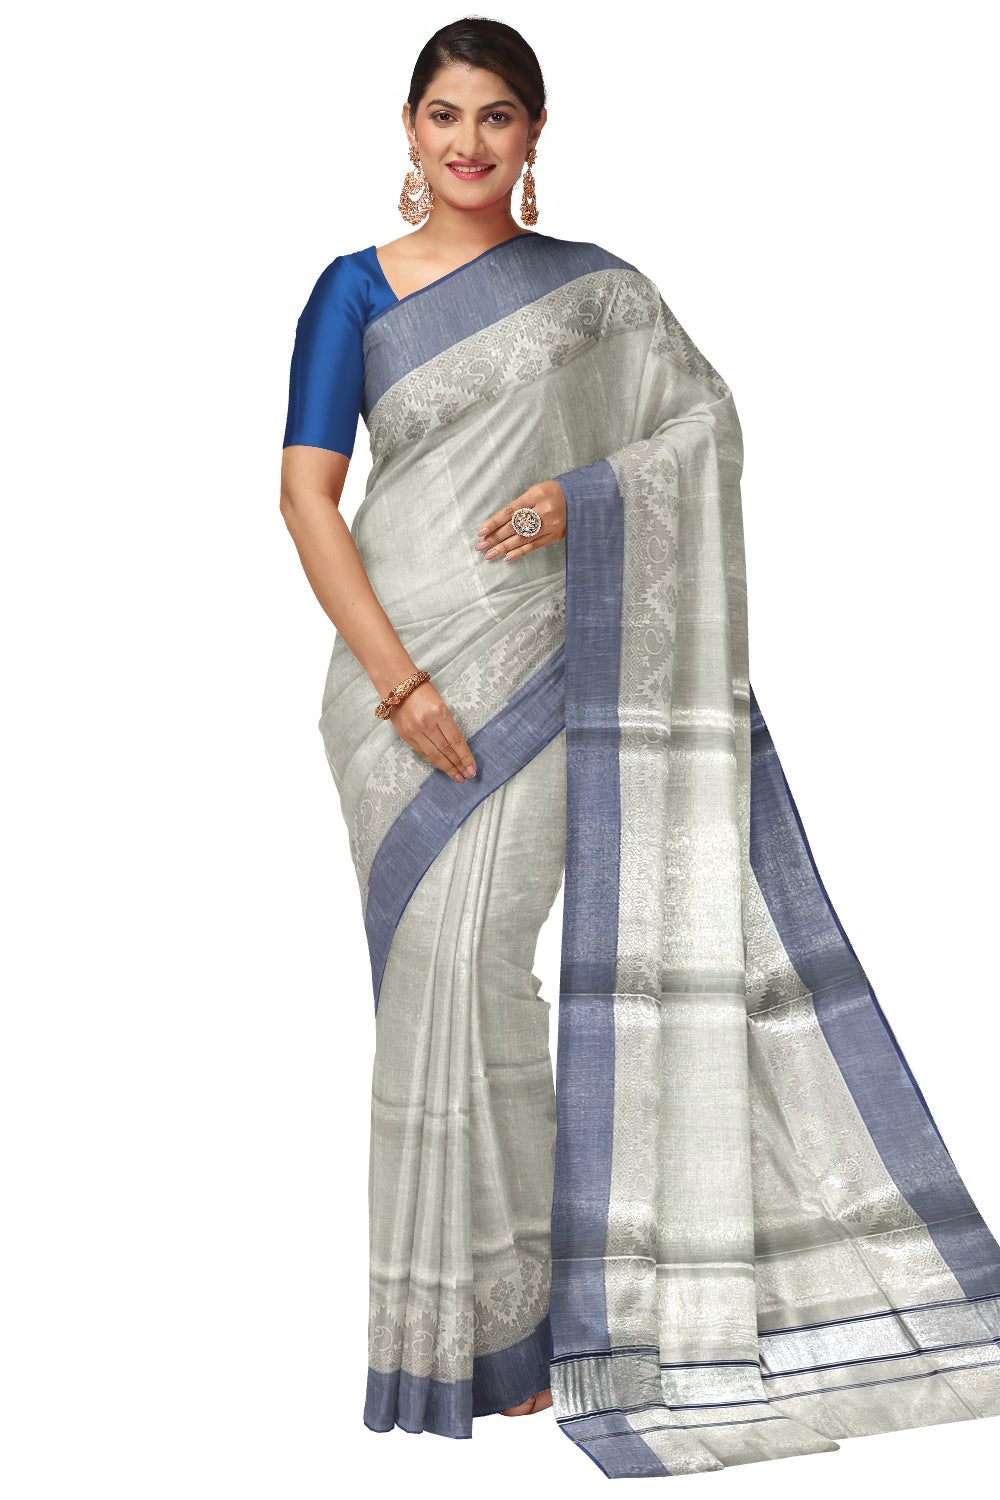 Kerala Silver Tissue Plain Saree with Blue and Silver Border